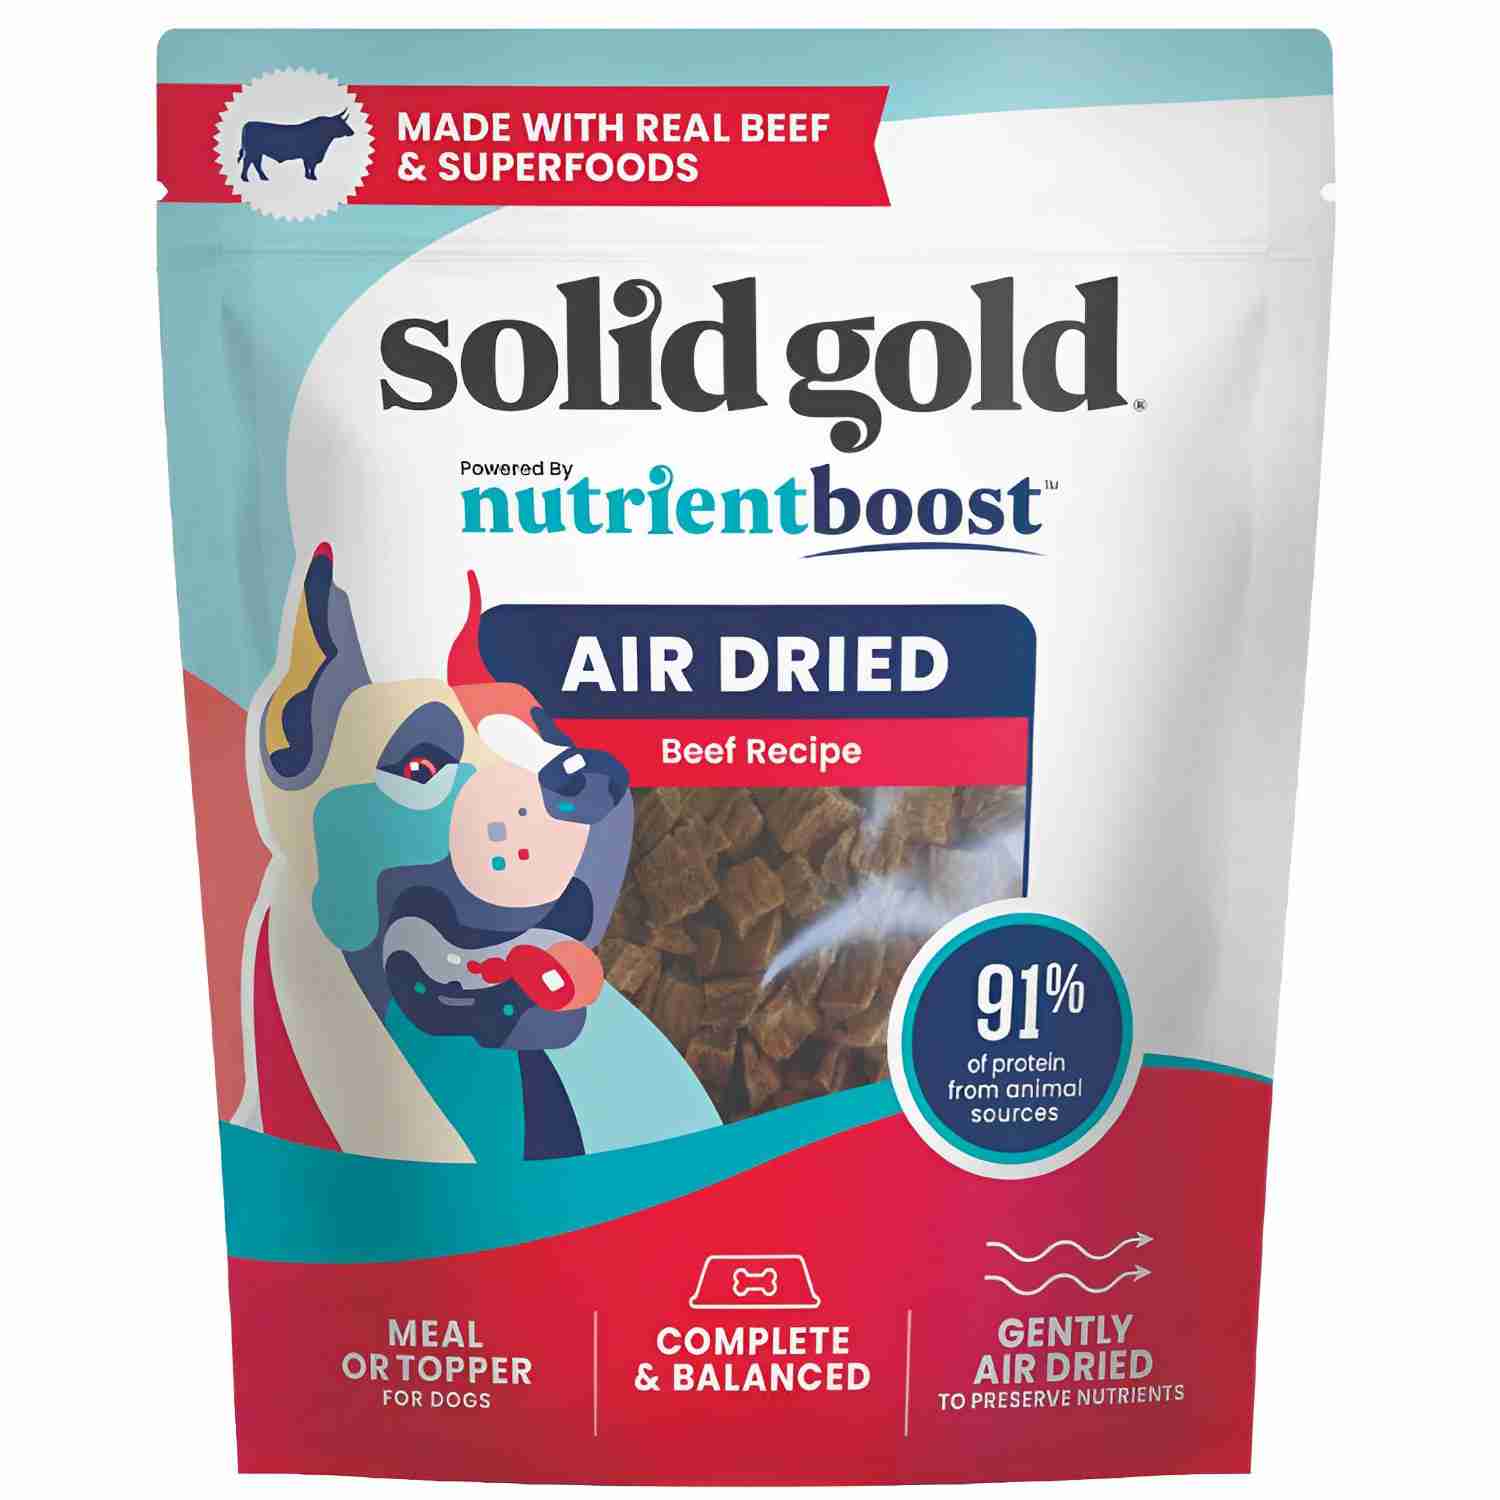 air-dried-dog-food with cash back rebate